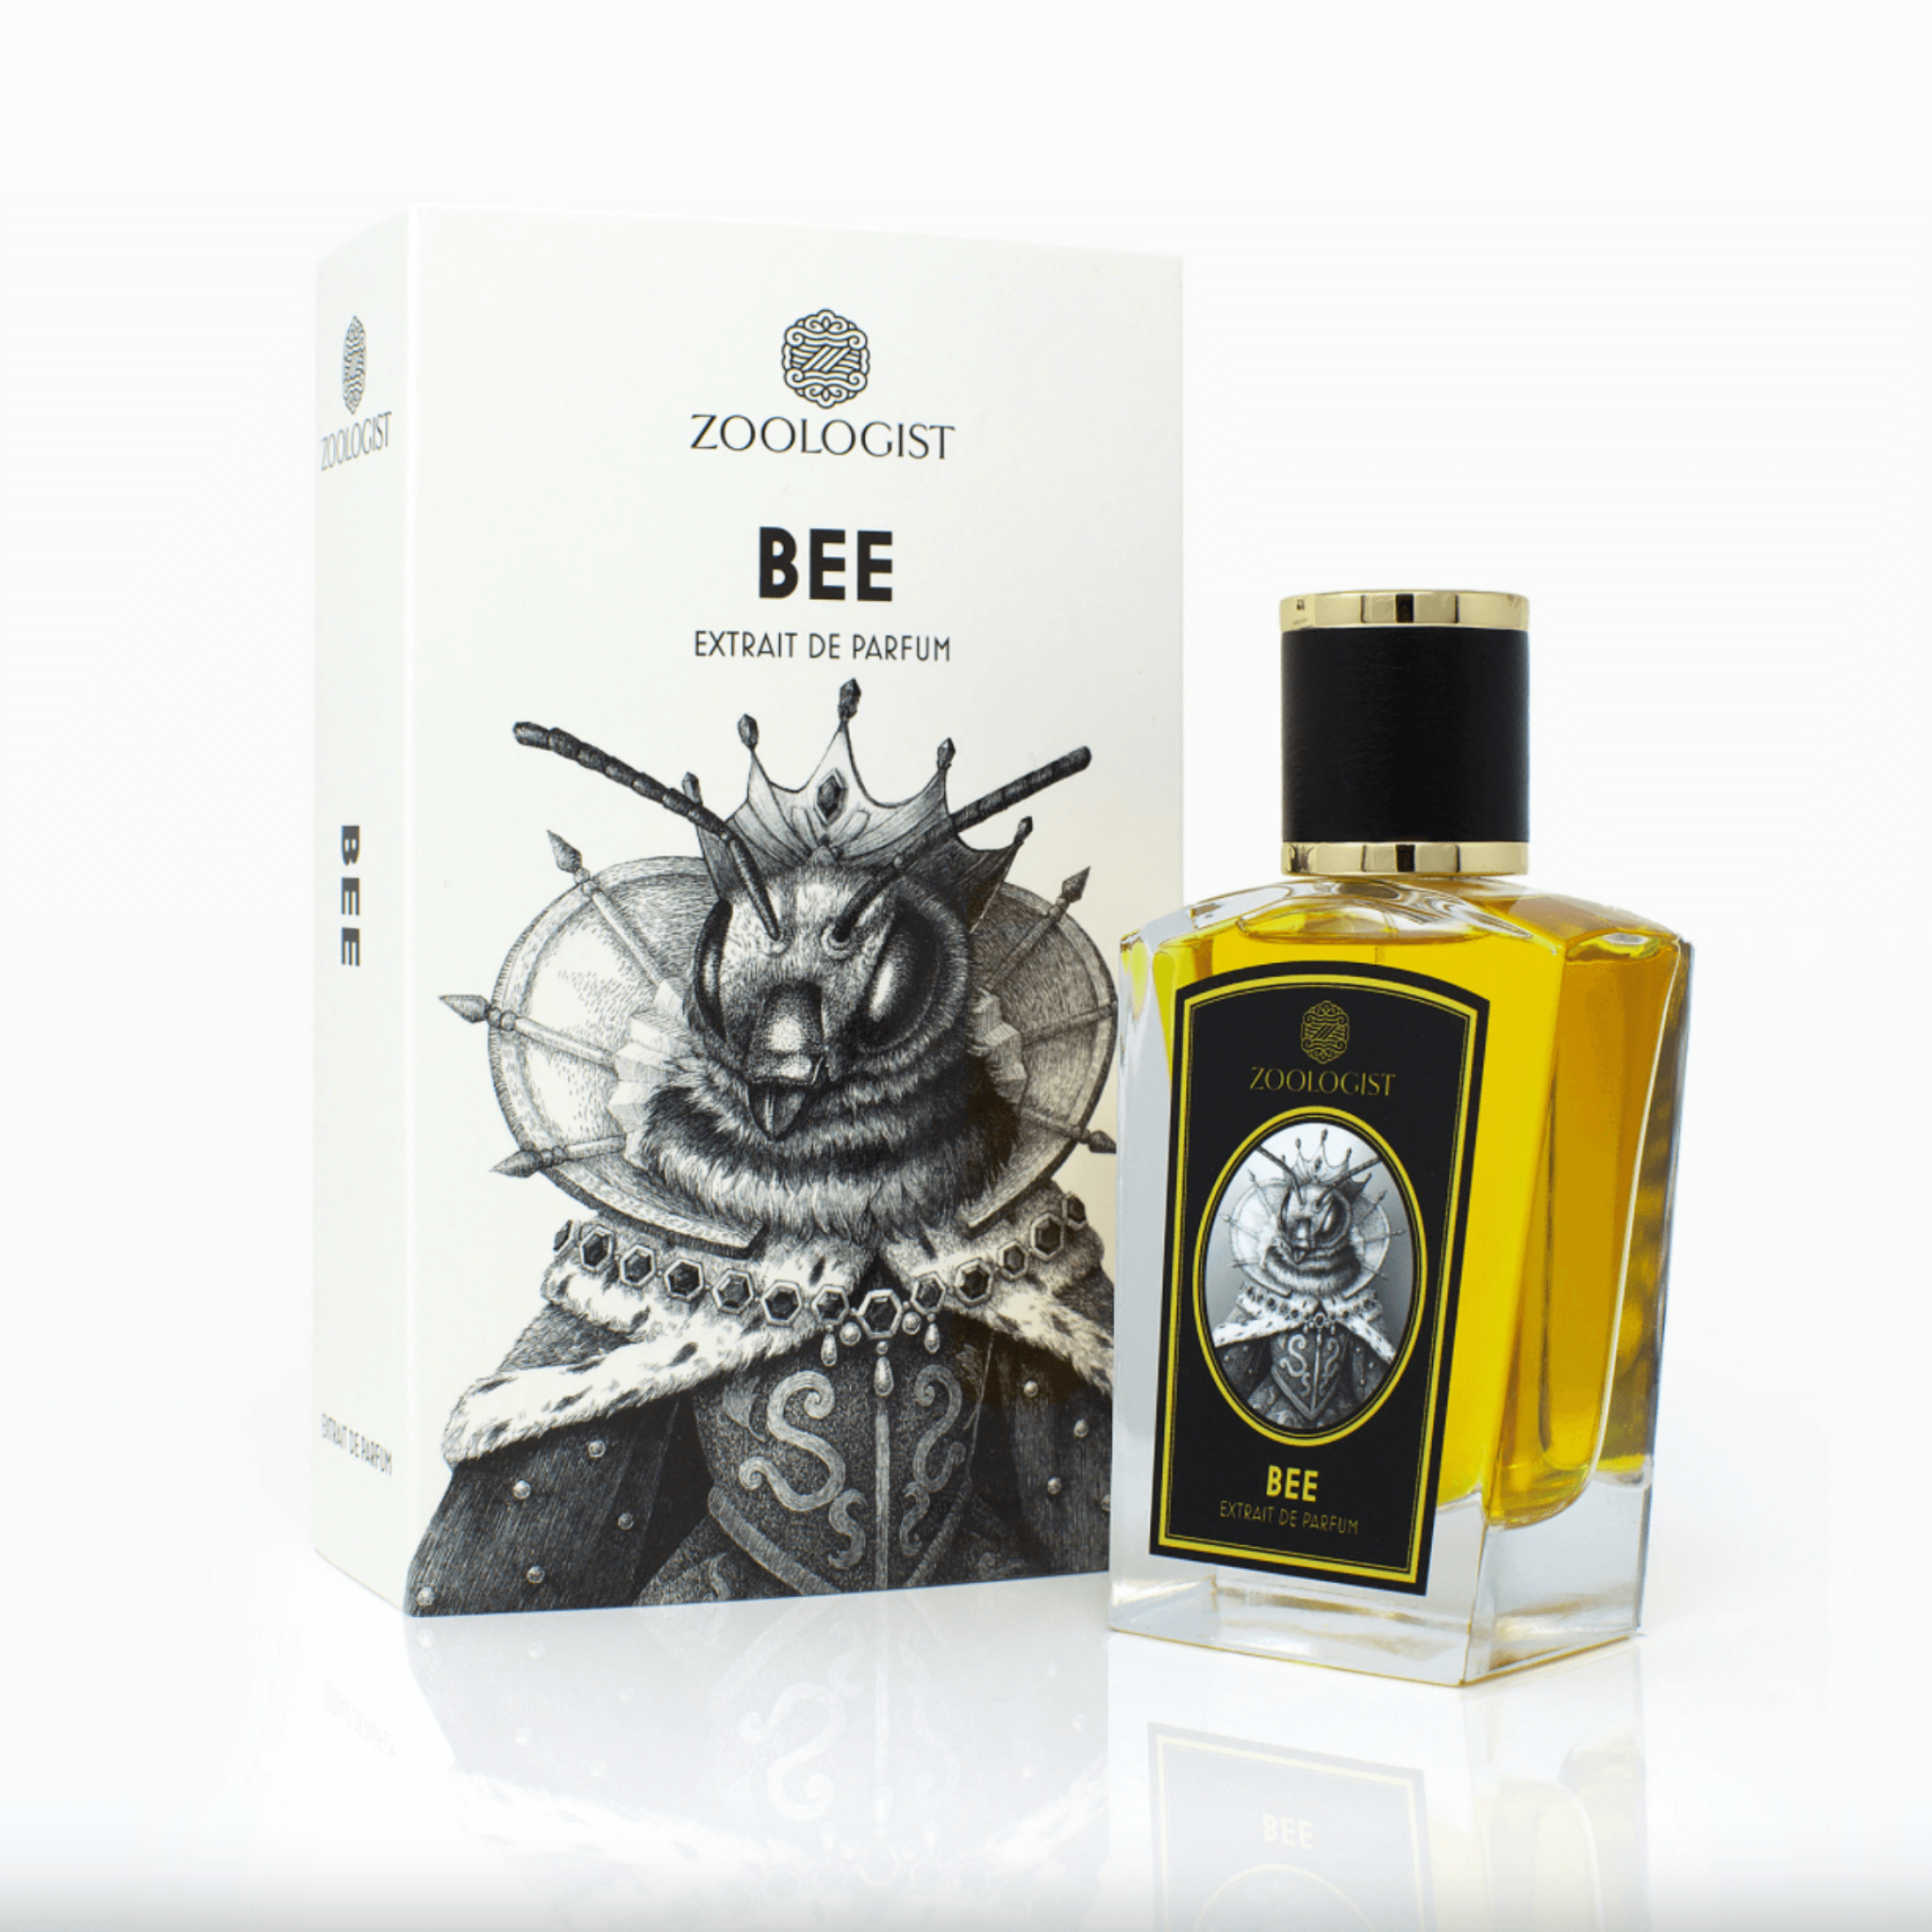 Bee parfum with box